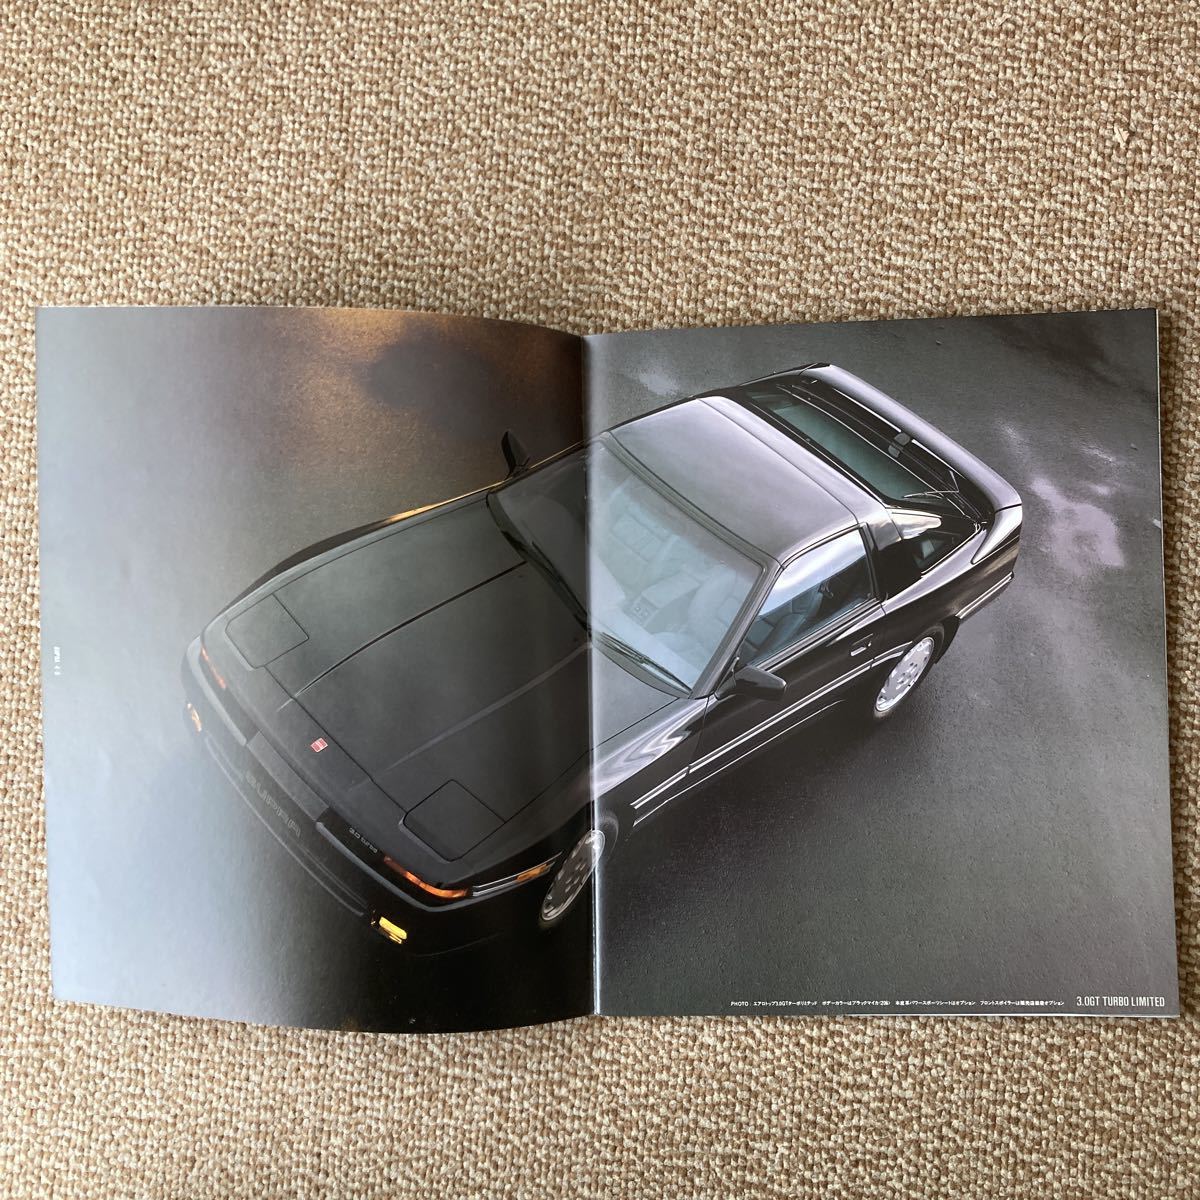  Toyota Supra catalog 1989 year 6 month 